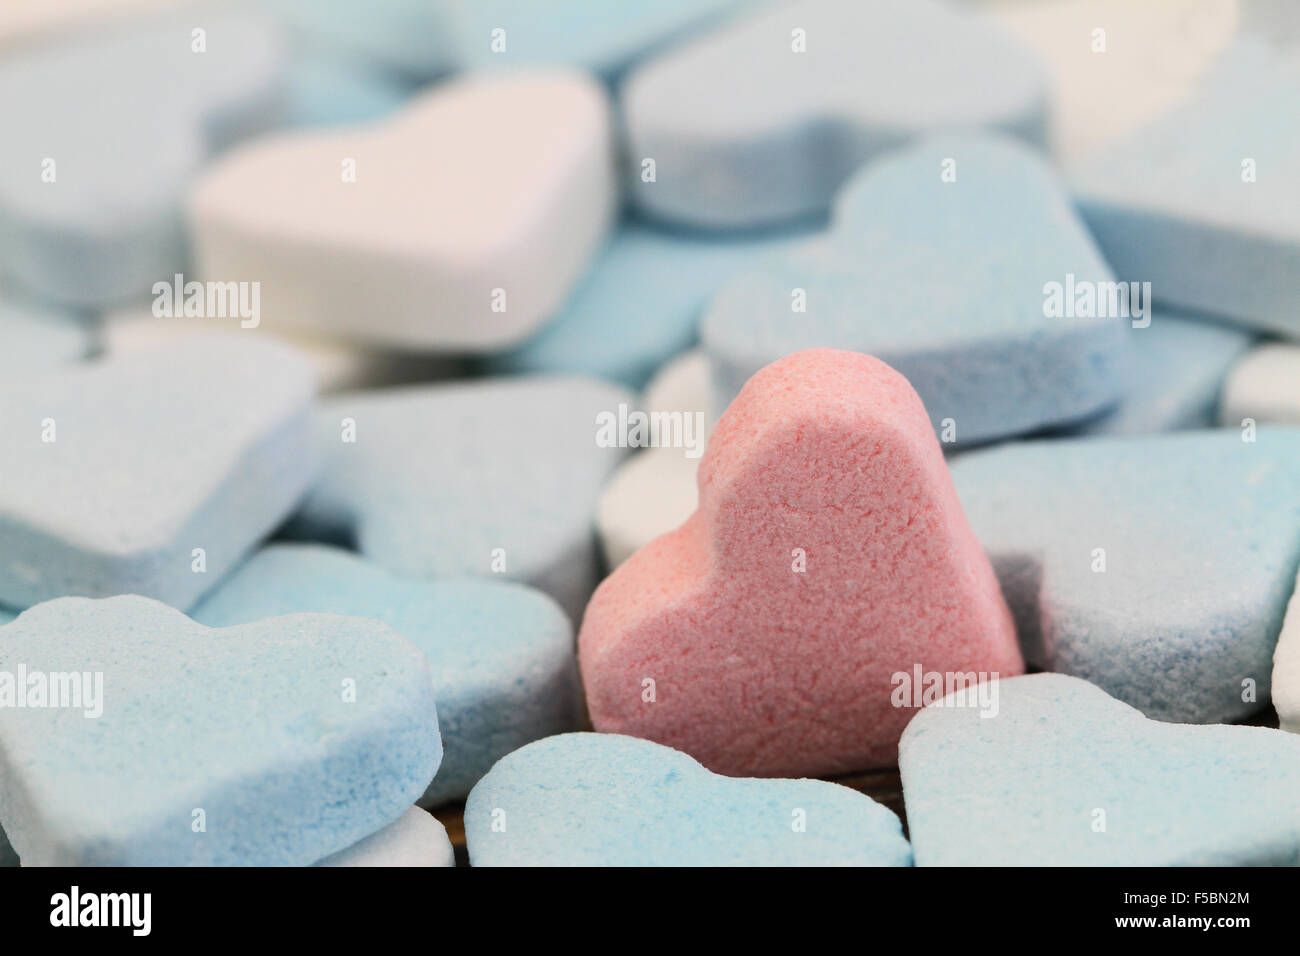 Pink sugar heart among white and blue sugar hearts Stock Photo